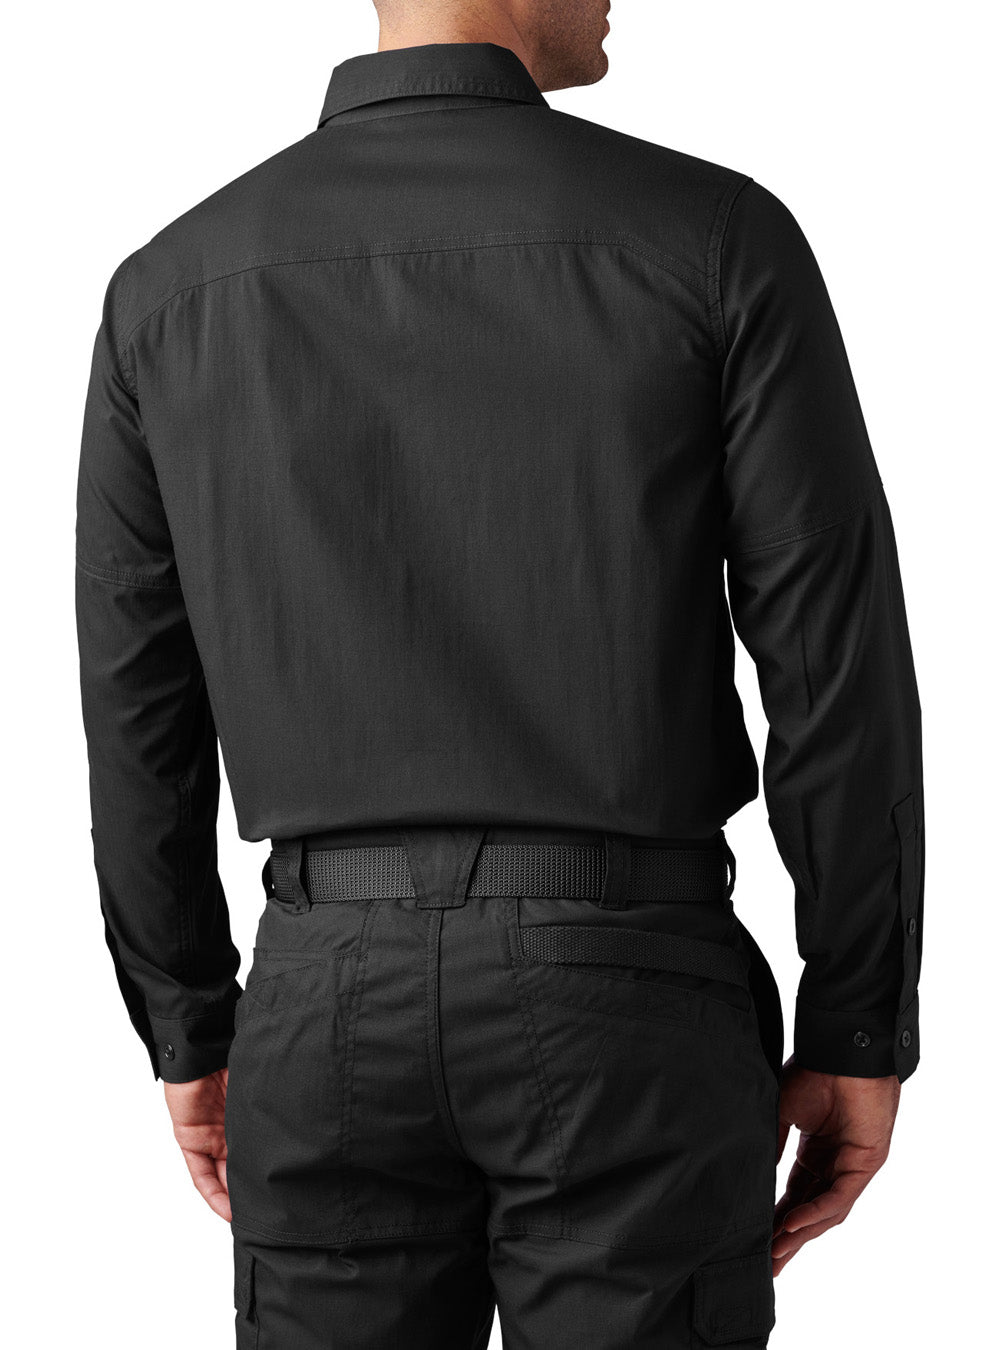 5.11 Tactical ABR Pro L/S Shirt - Khaki - TacSource